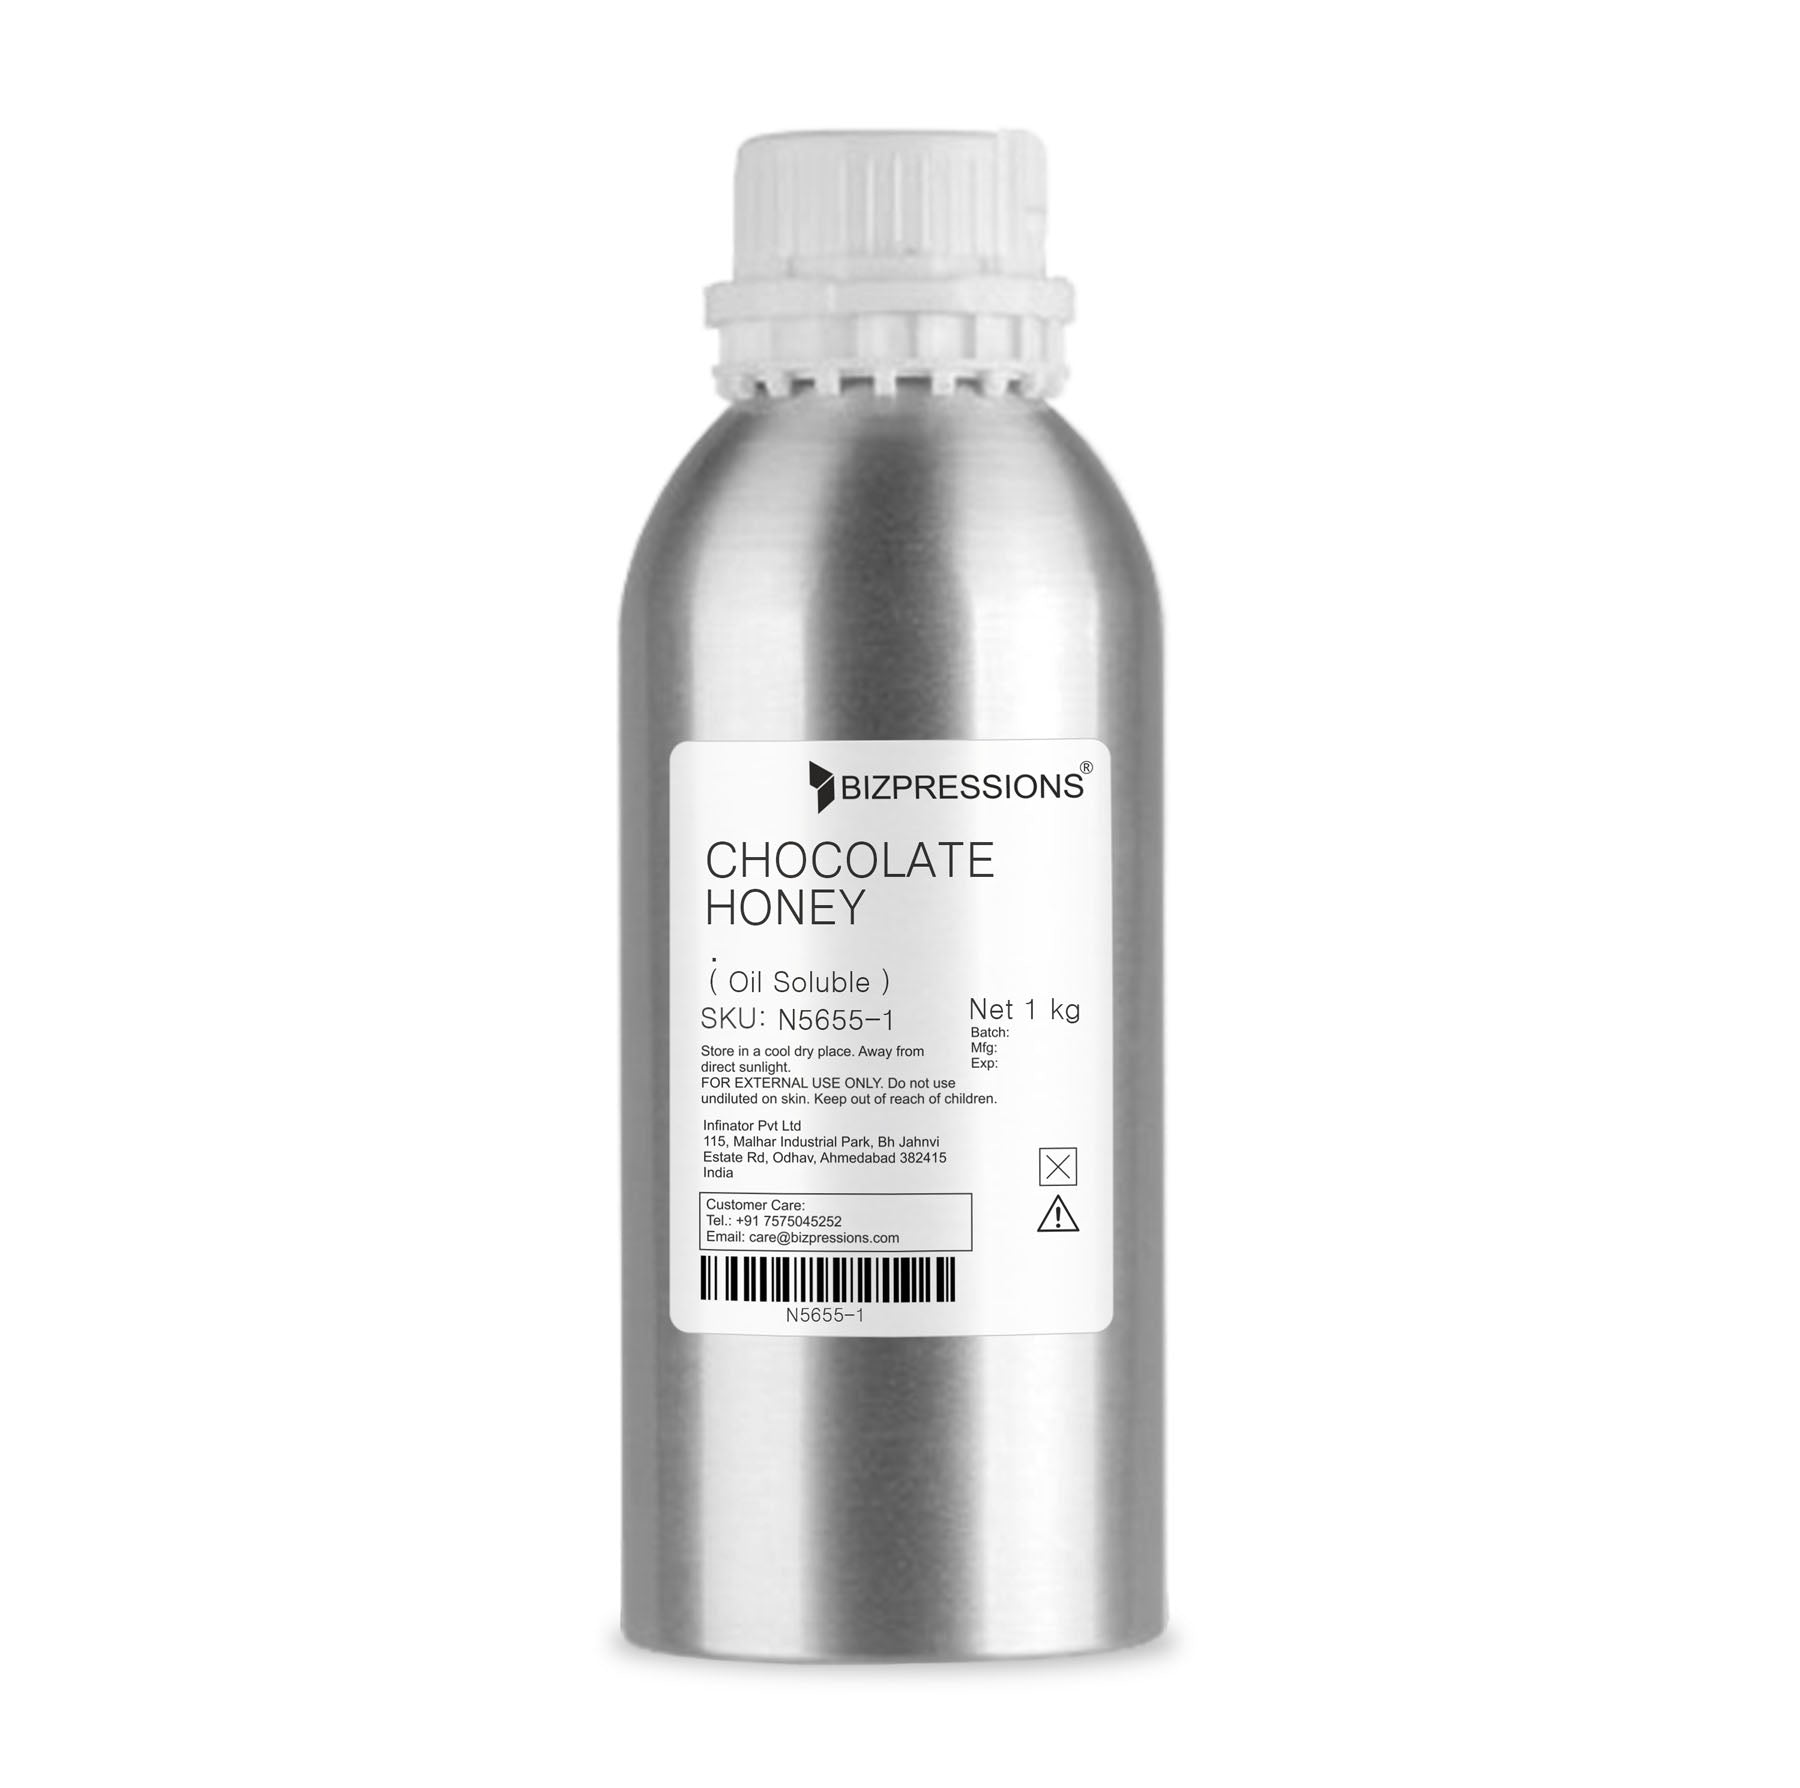 CHOCOLATE HONEY - Fragrance ( Oil Soluble ) - 1 kg